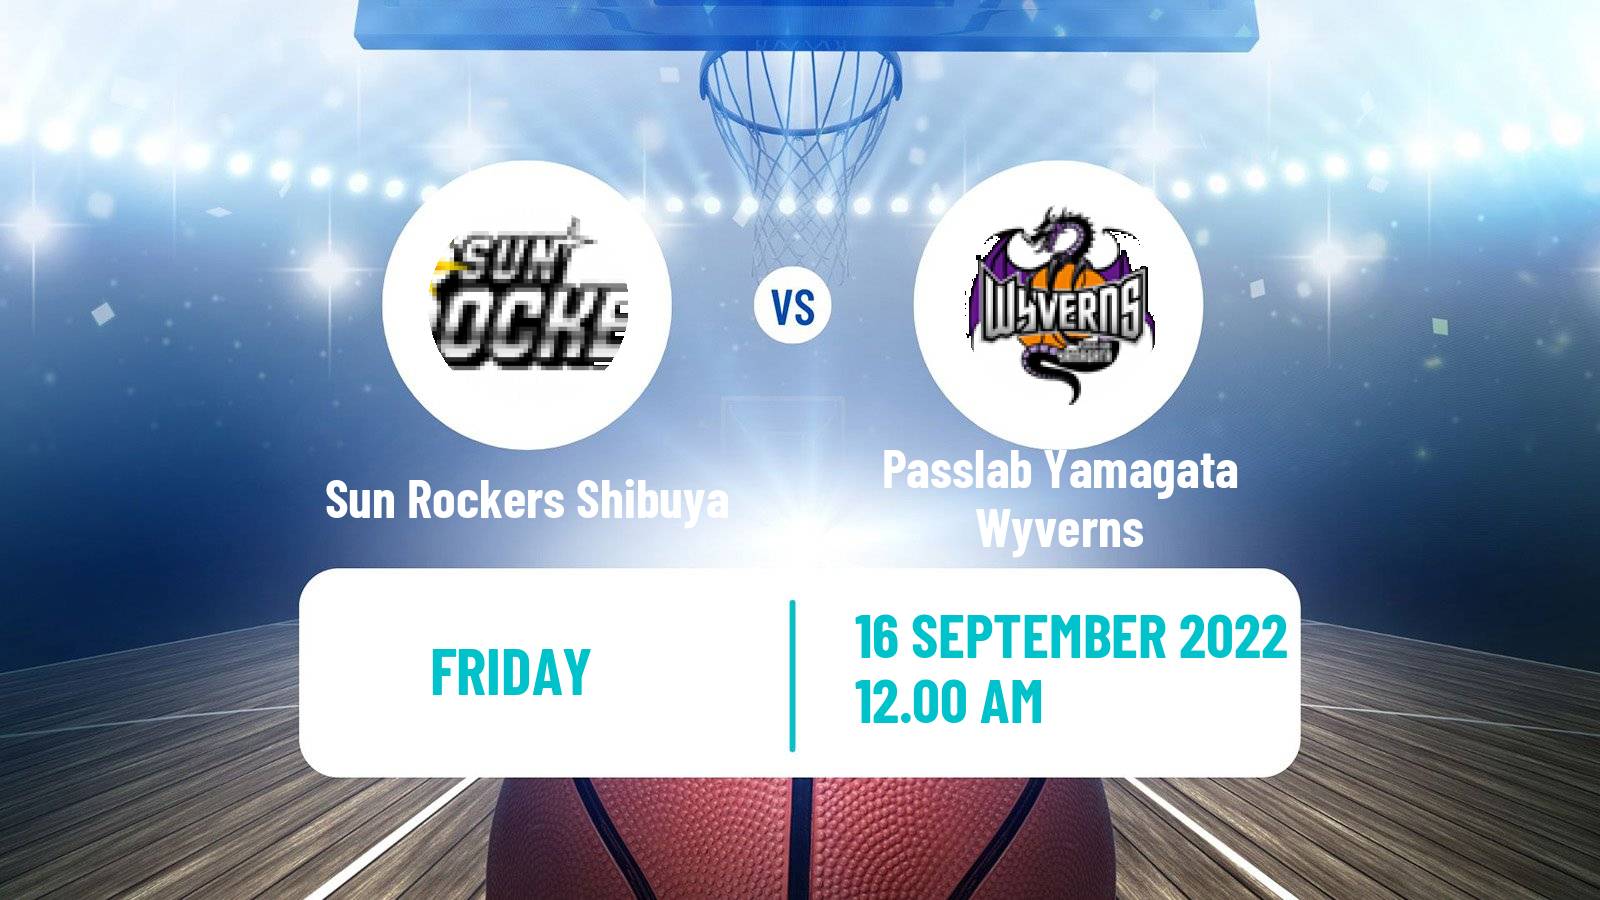 Basketball Club Friendly Basketball Sun Rockers Shibuya - Passlab Yamagata Wyverns